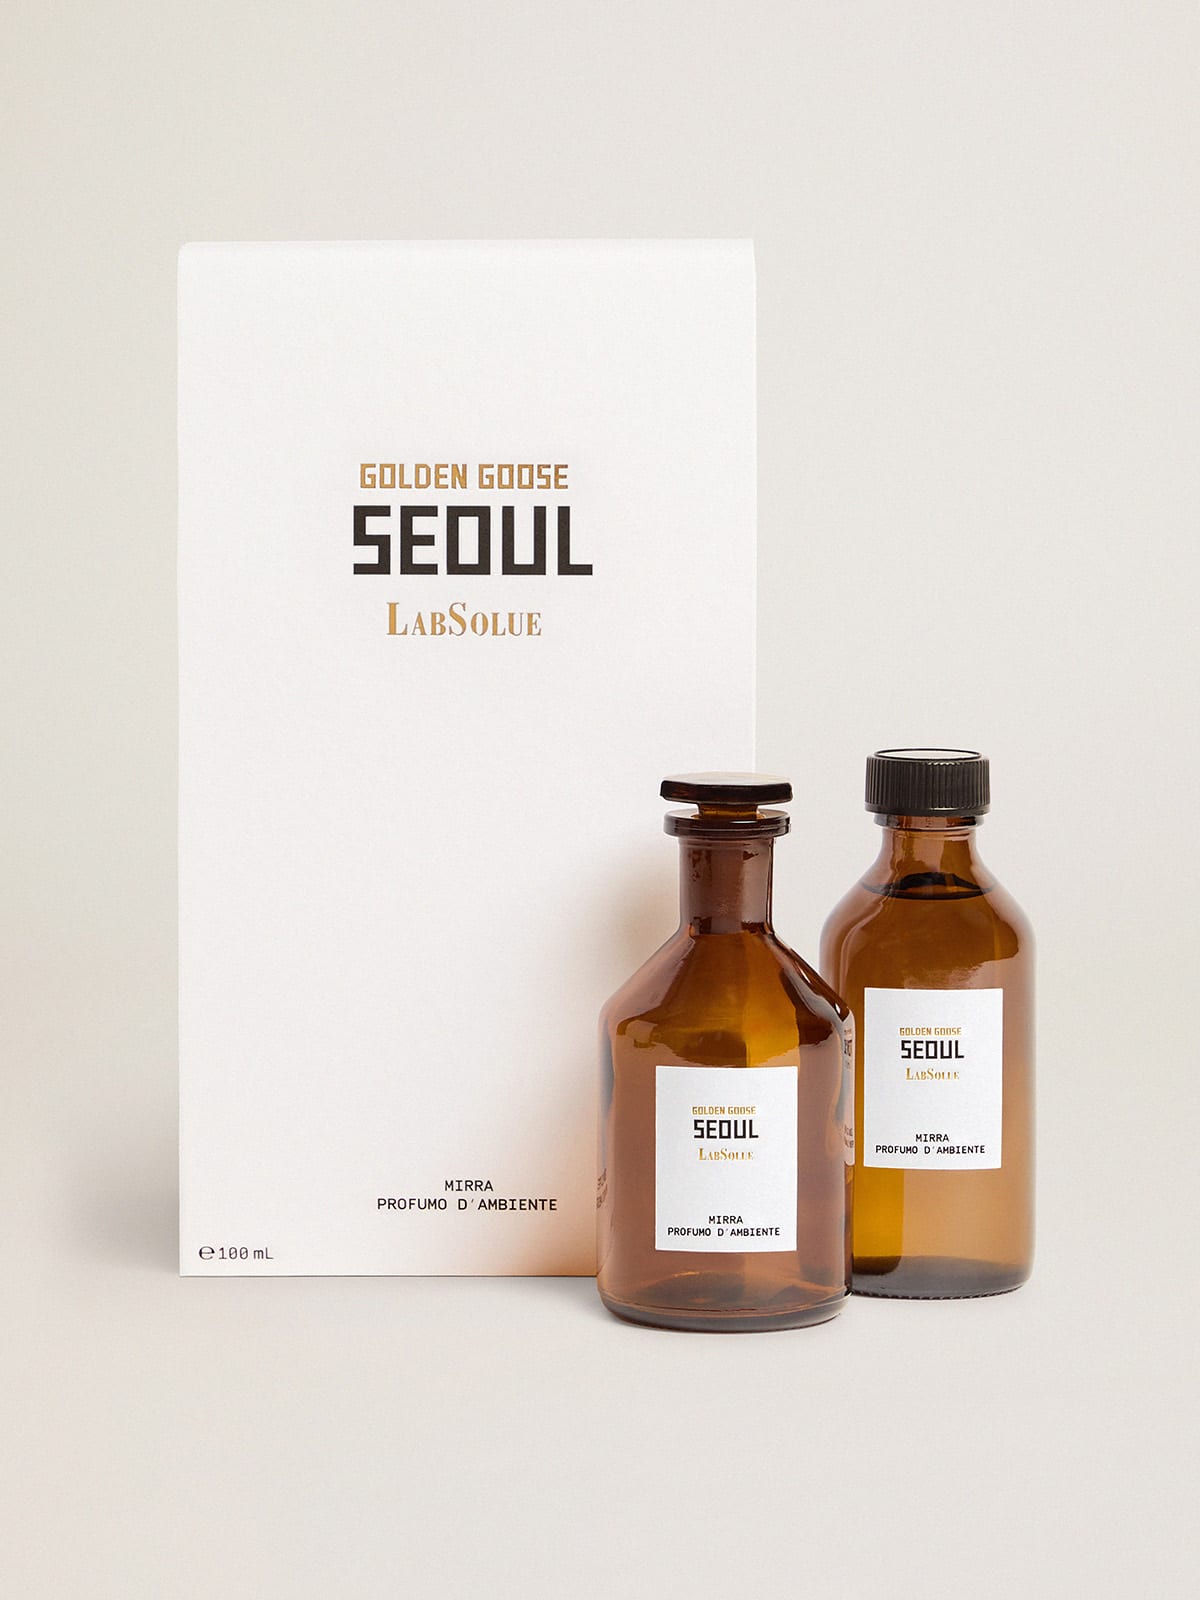 Golden Goose - Seoul Essence Mirra Fragranza d'ambiente 100 ml in 